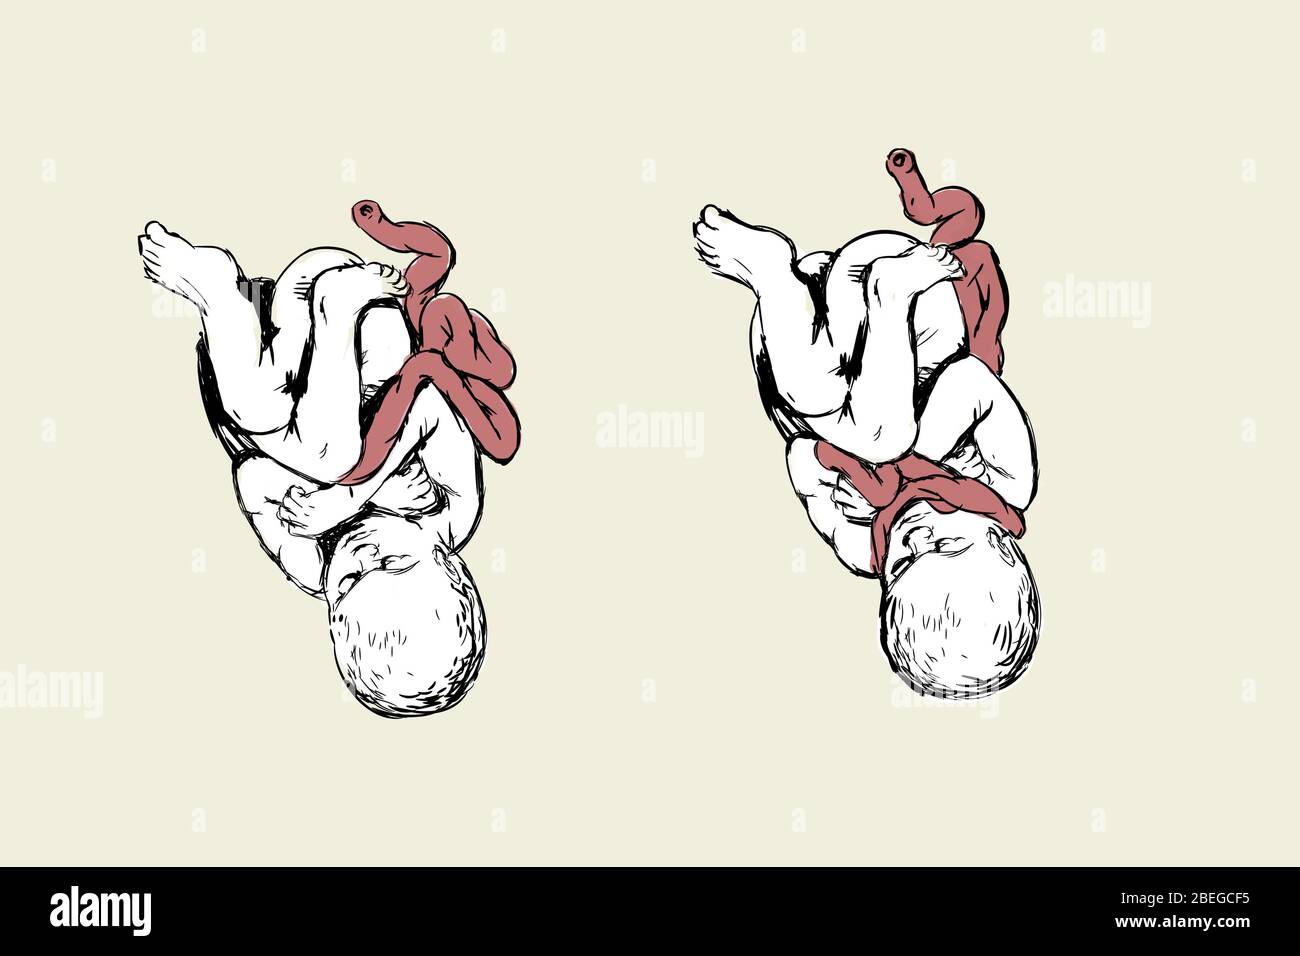 Nuchal Cord and Birth Asphyxia, Illustration Stock Photo